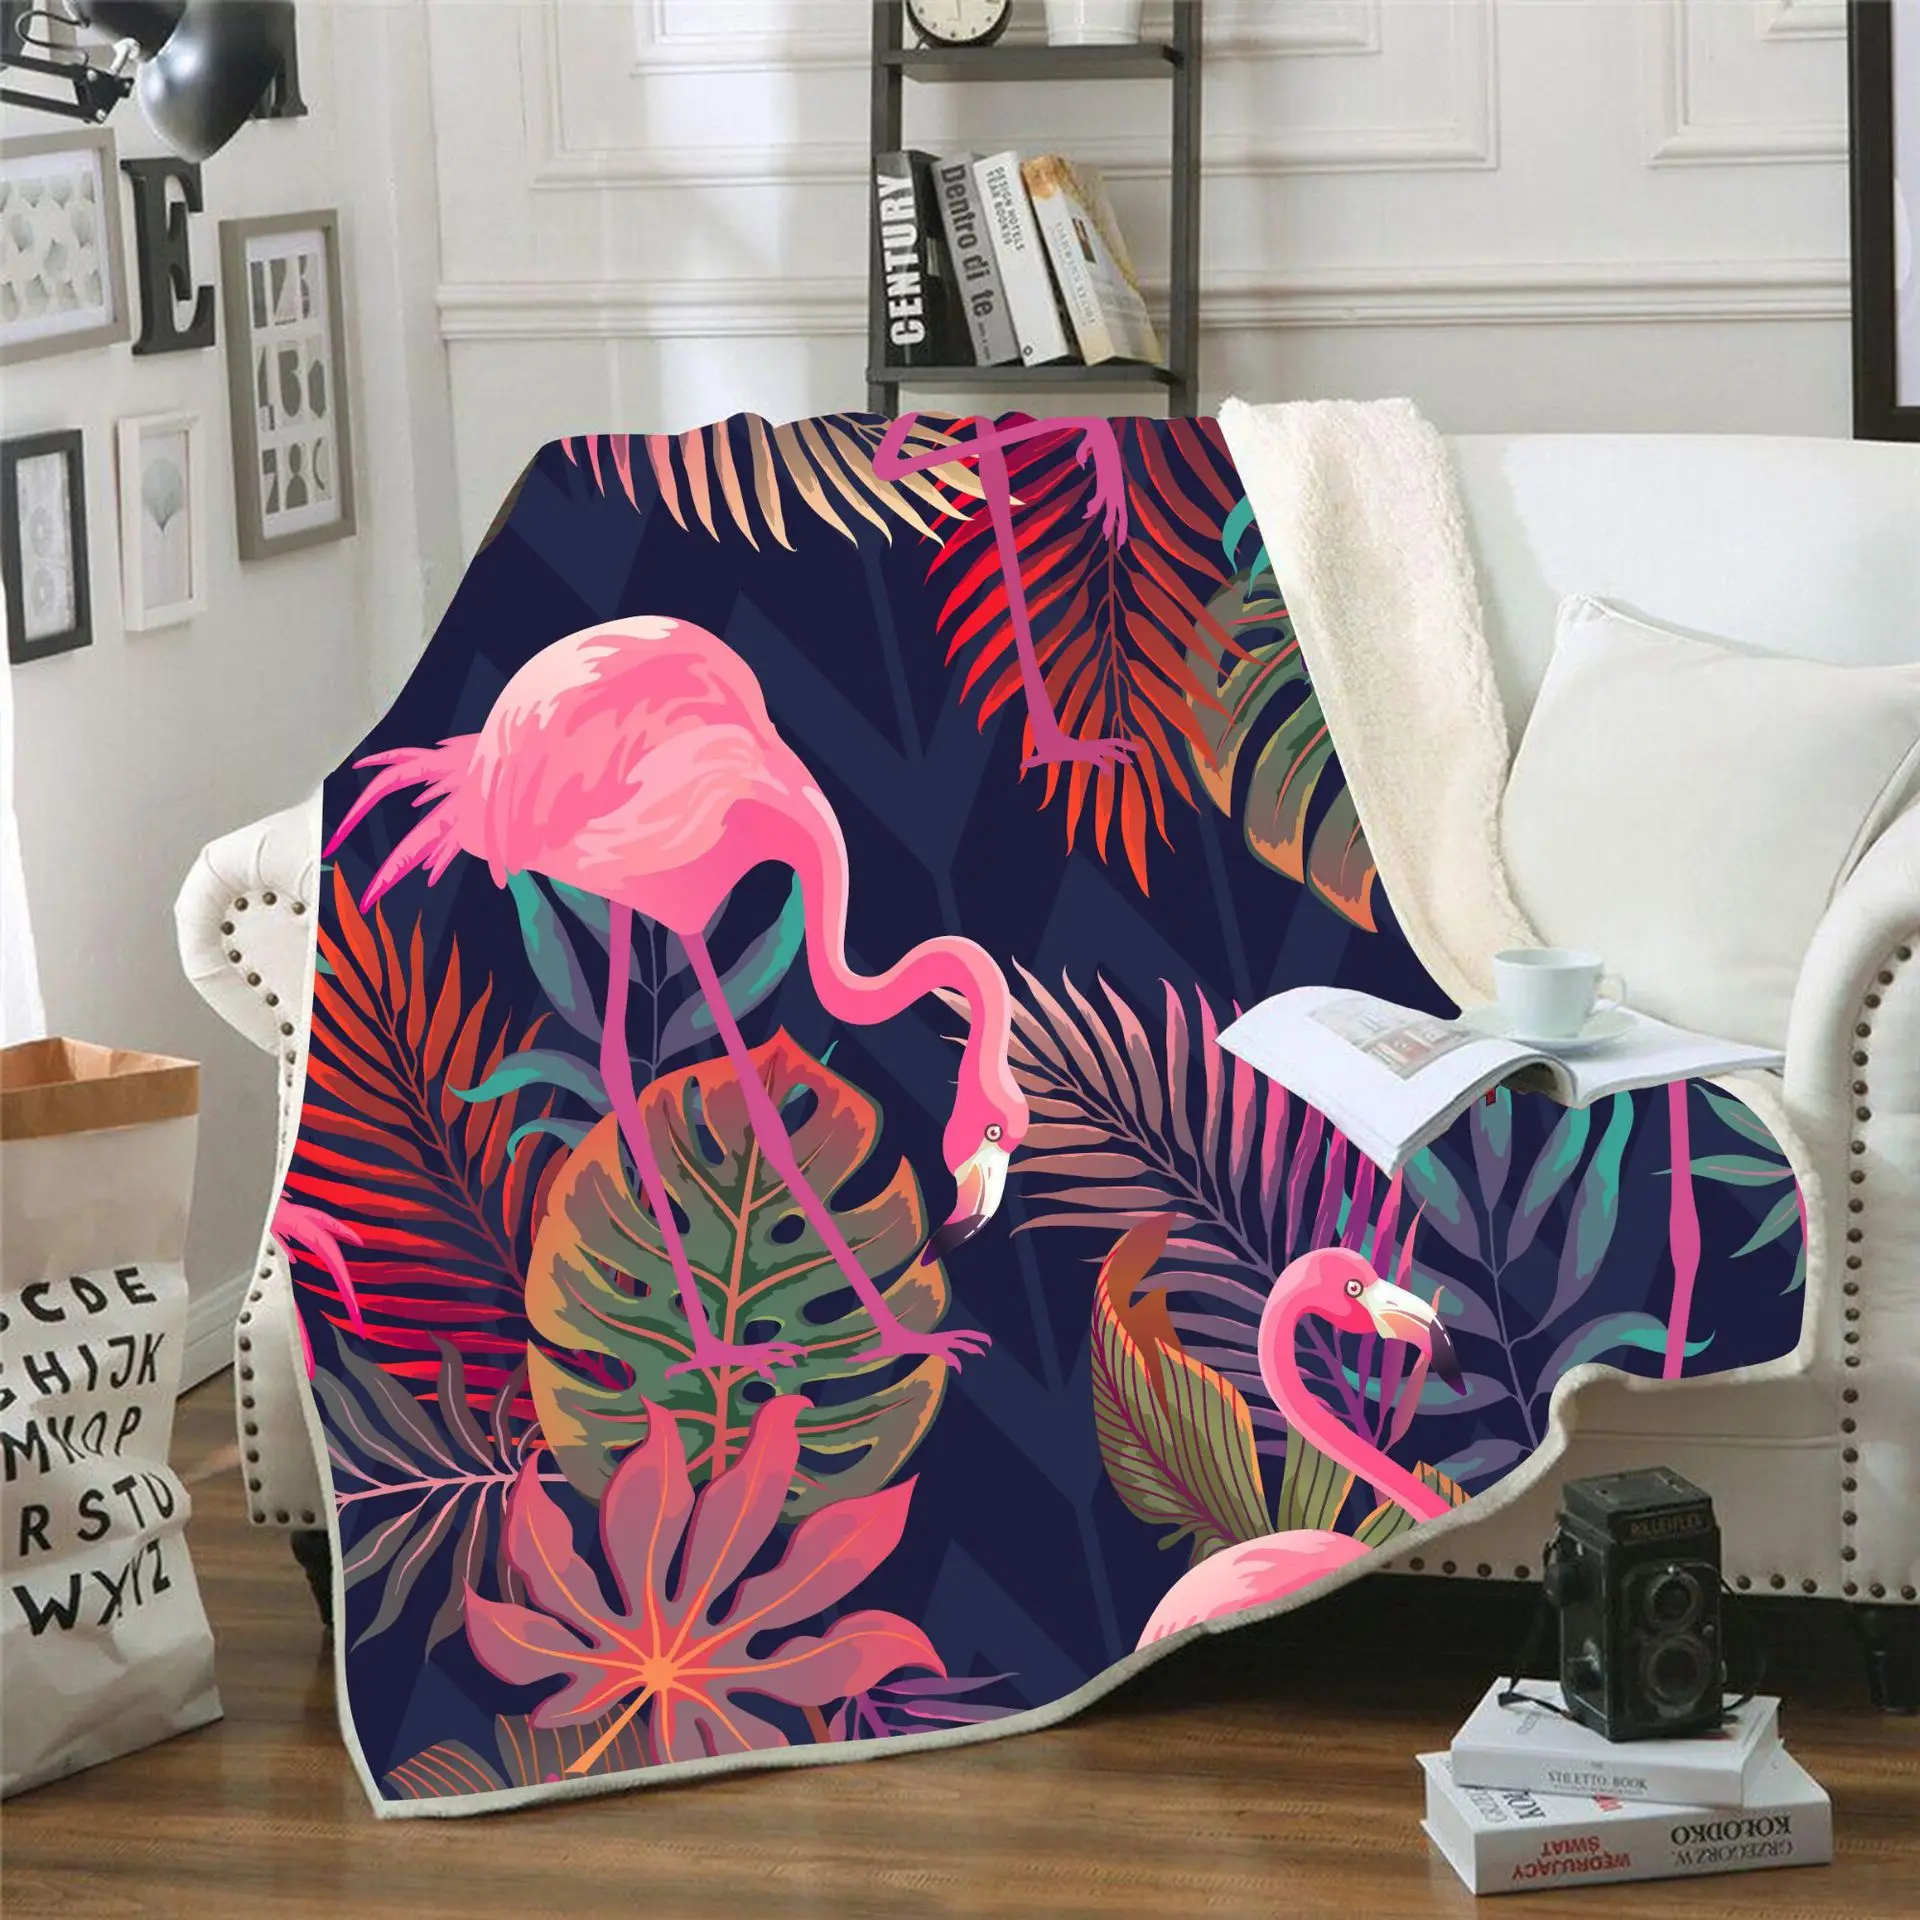 

Flamingo 3D Printed Sherpa Blanket Couch Quilt Cover Travel Bedding Velvet Plush Throw Fleece Blanket Bedspread FO2